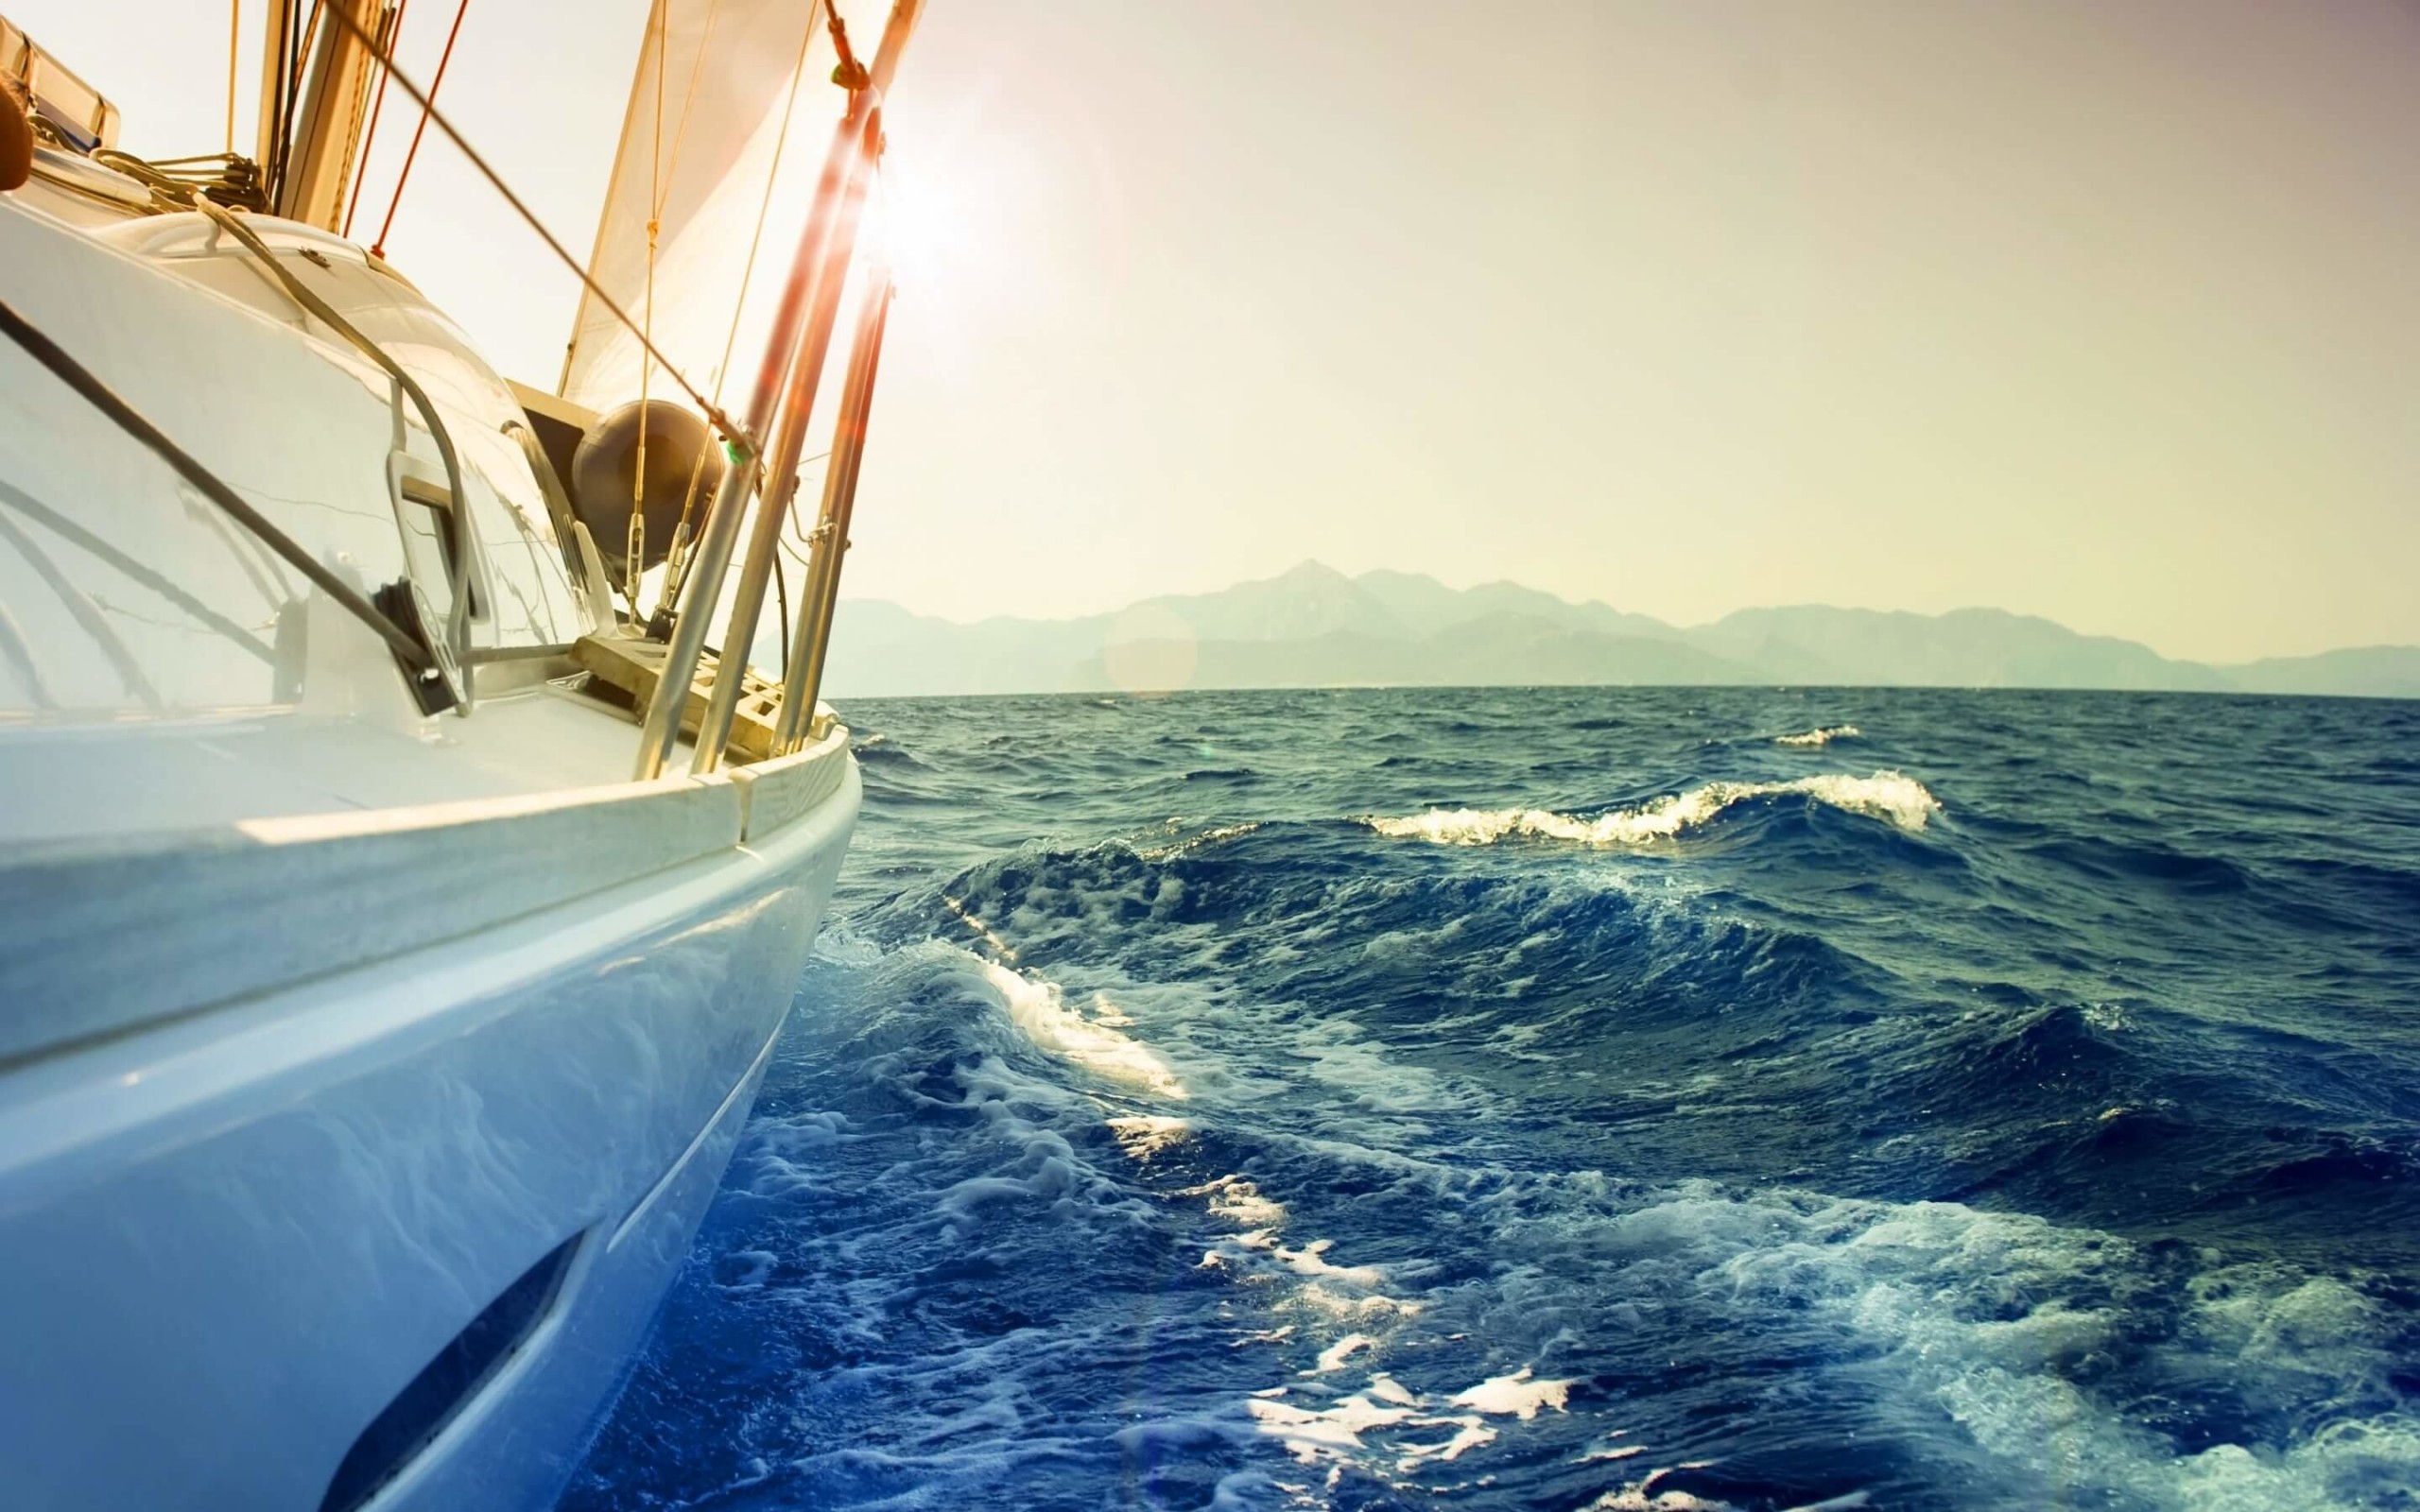 Yacht Sailing Downwind at Sunset Wallpaper for Desktop 2560x1600